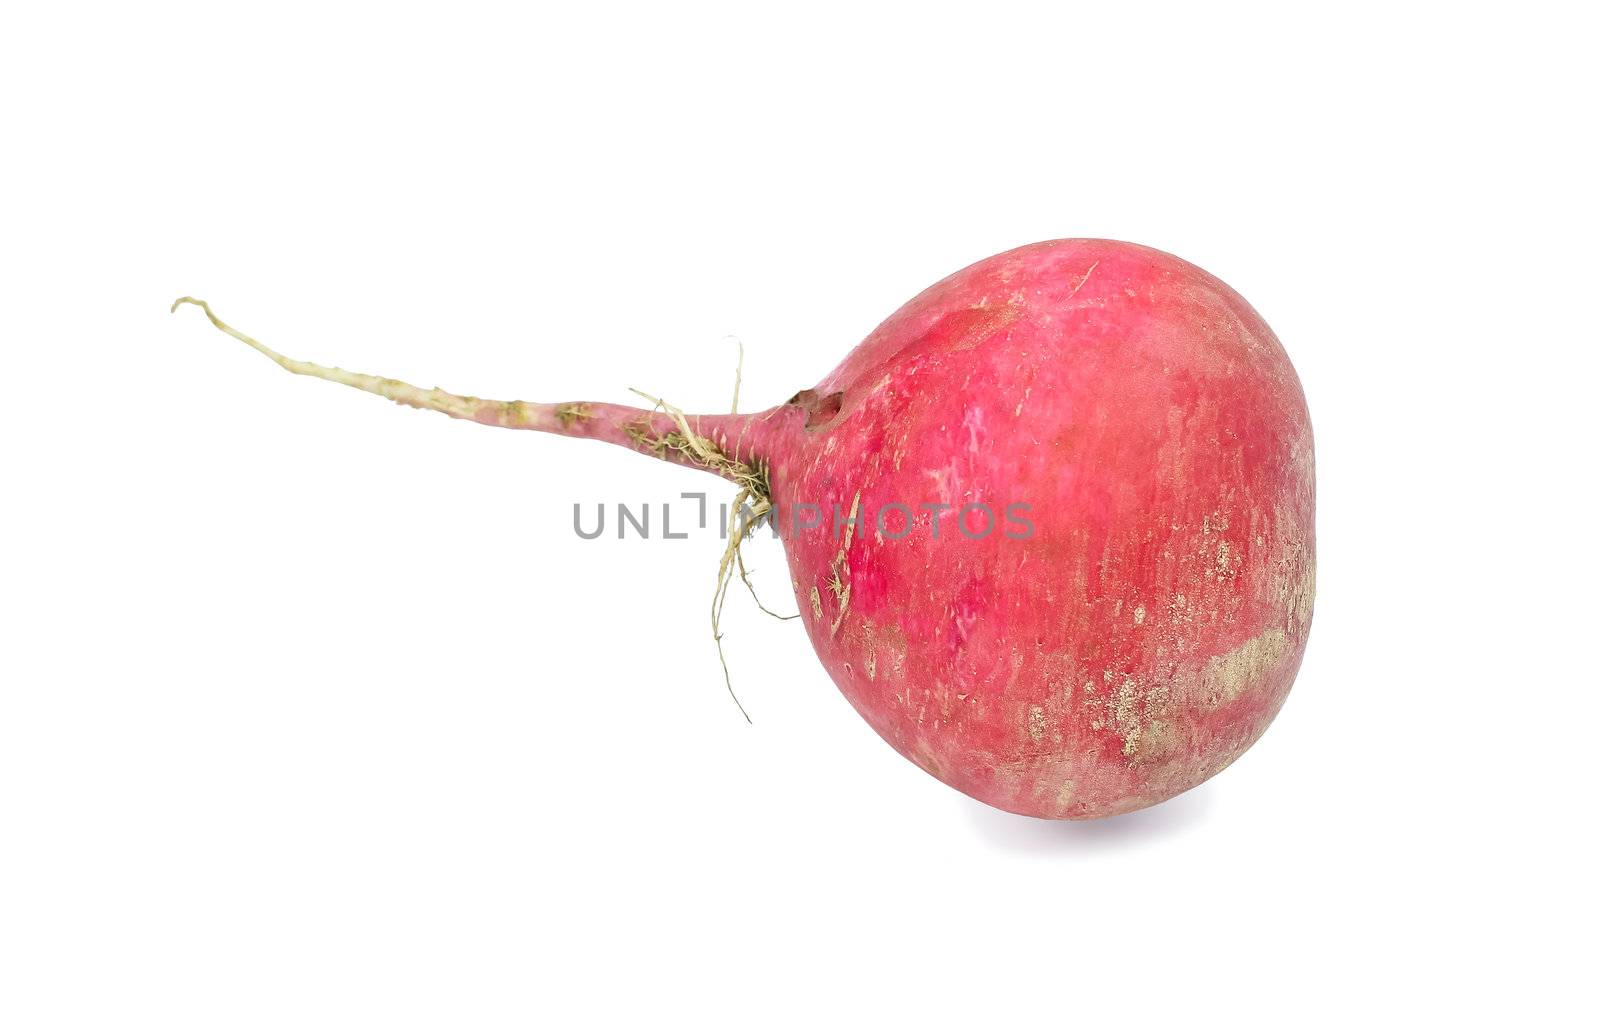 One large radish on a white background by NickNick